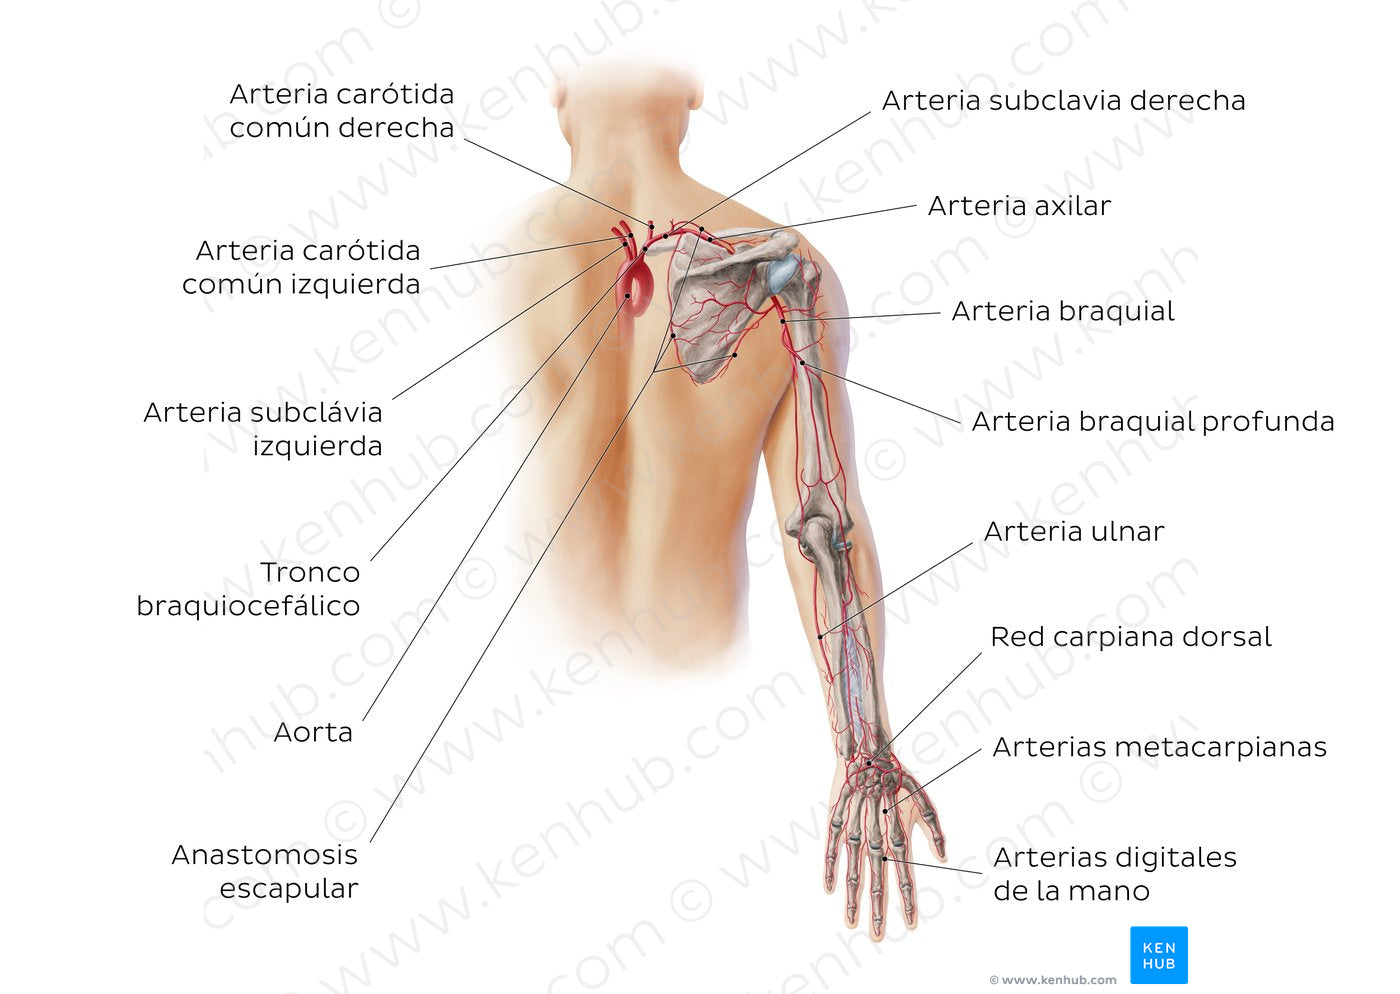 Main arteries of the upper limb - posterior (Spanish)